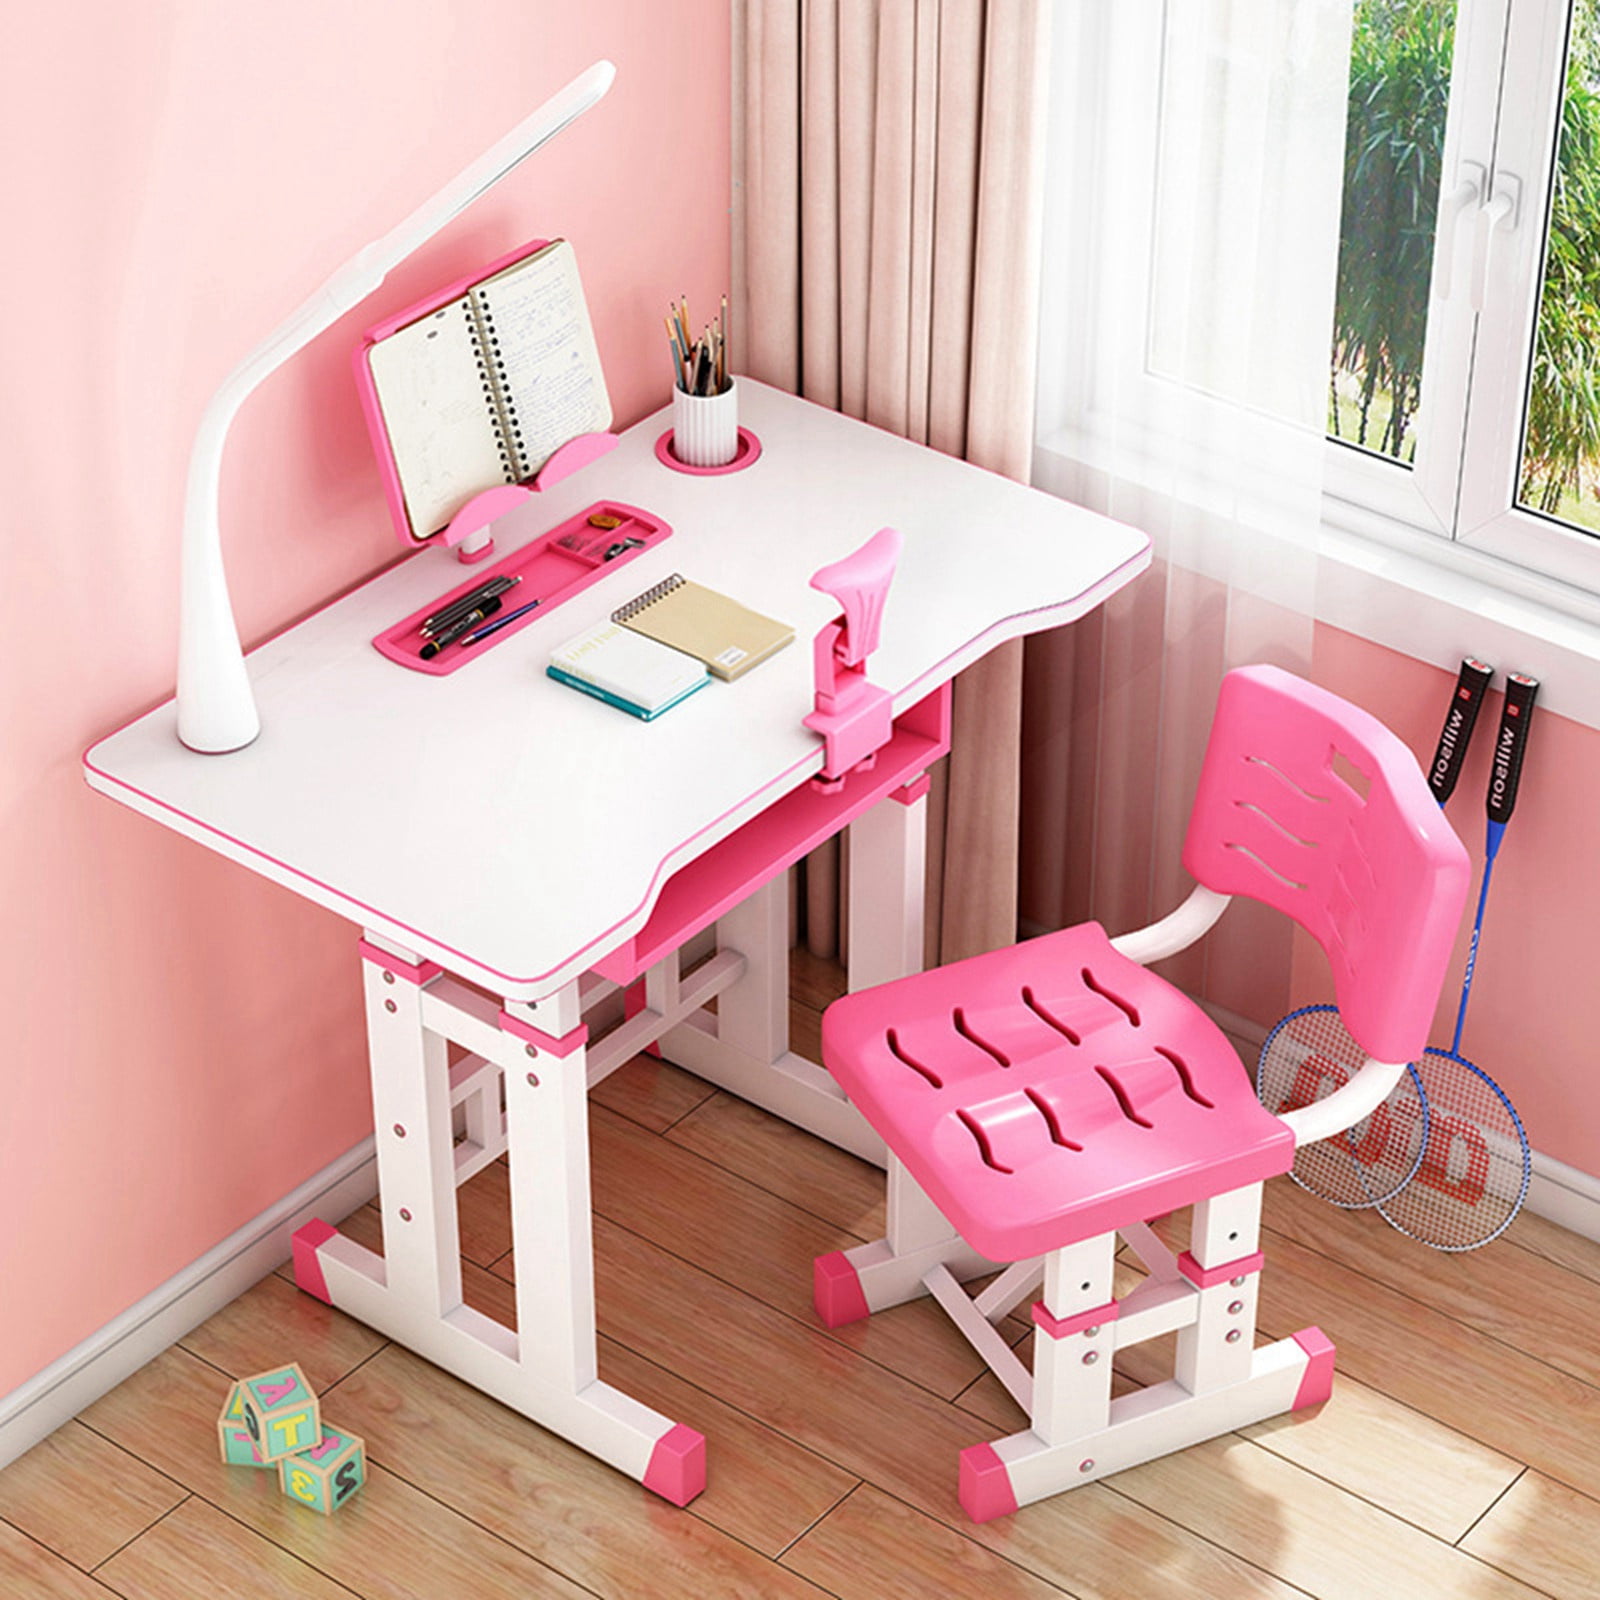 Ergonomic Children Study Table Kids Desk Chair Set with Drawer Storage Pink 